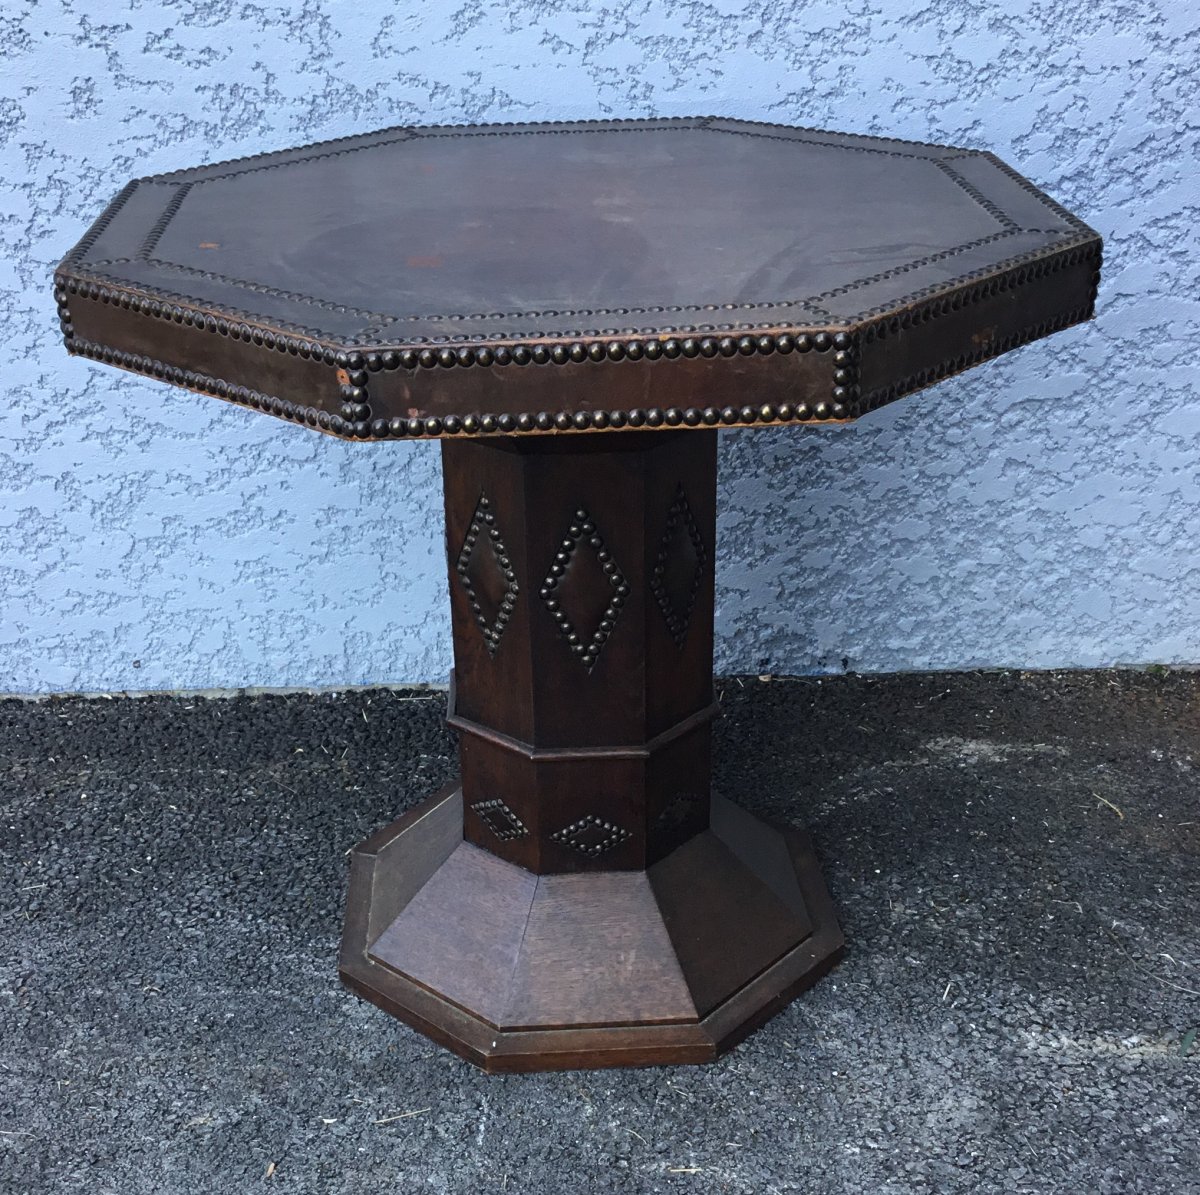 Pedestal Table 1940